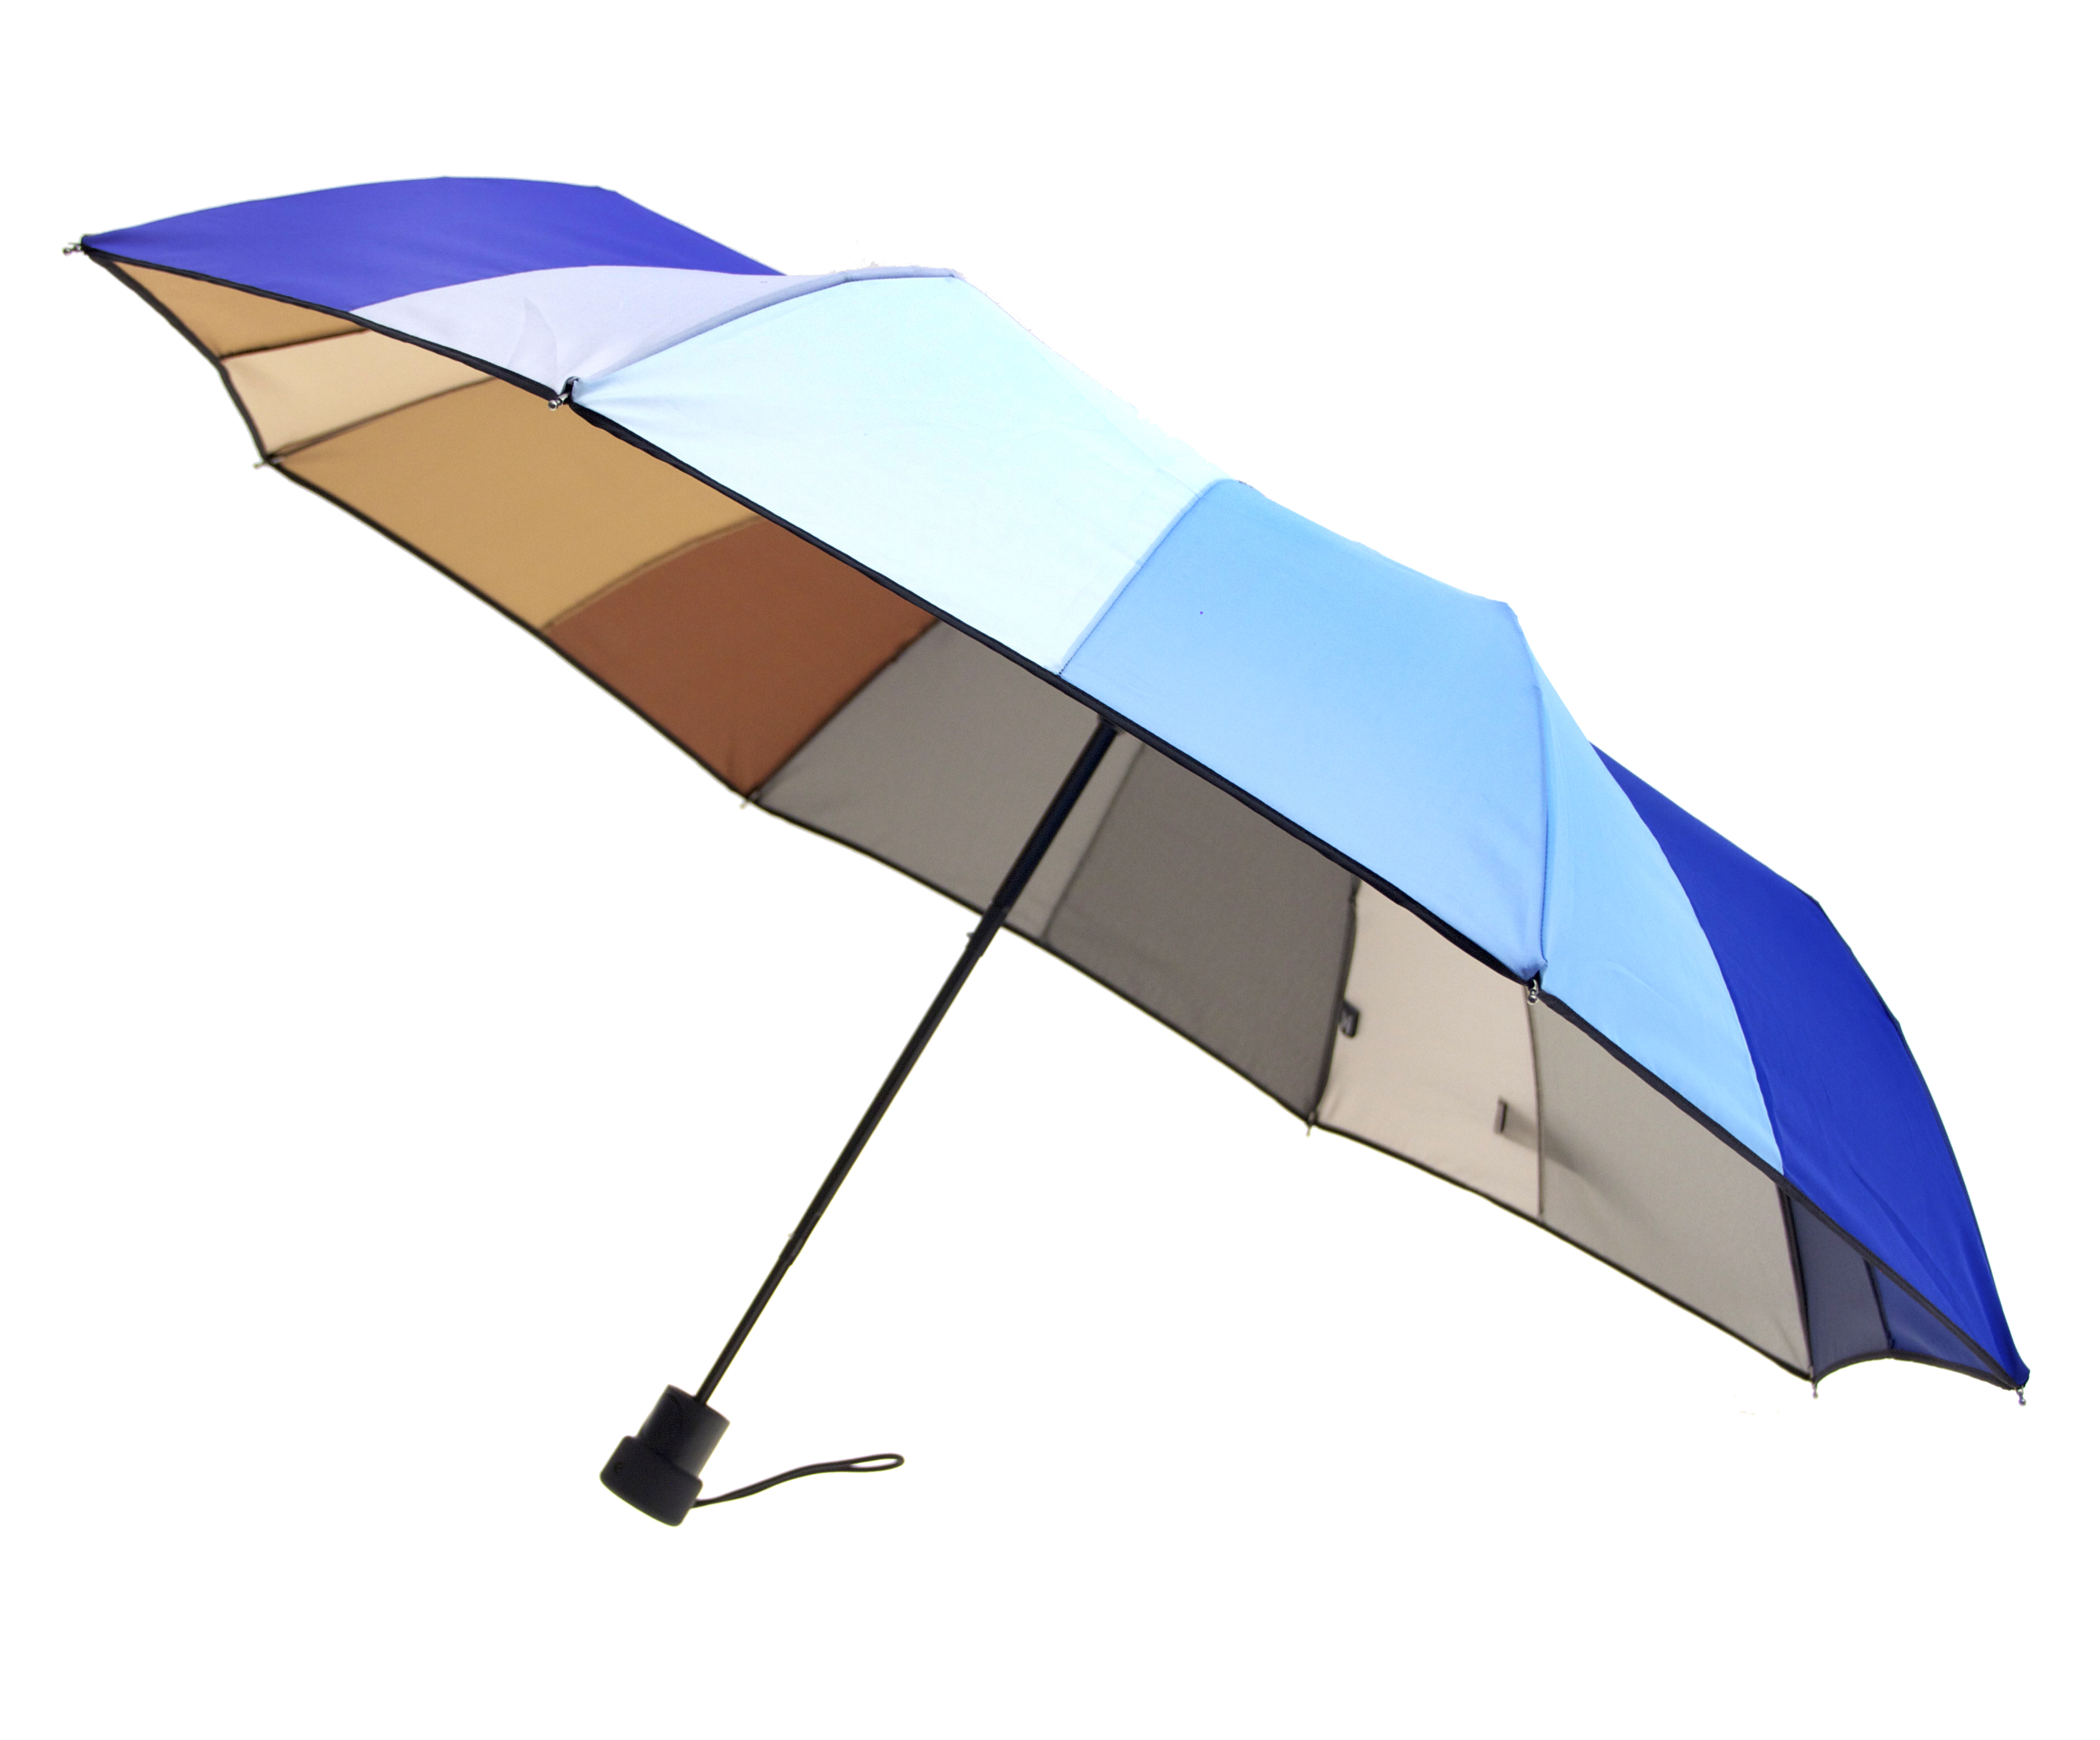 Cool rainbow umbrella